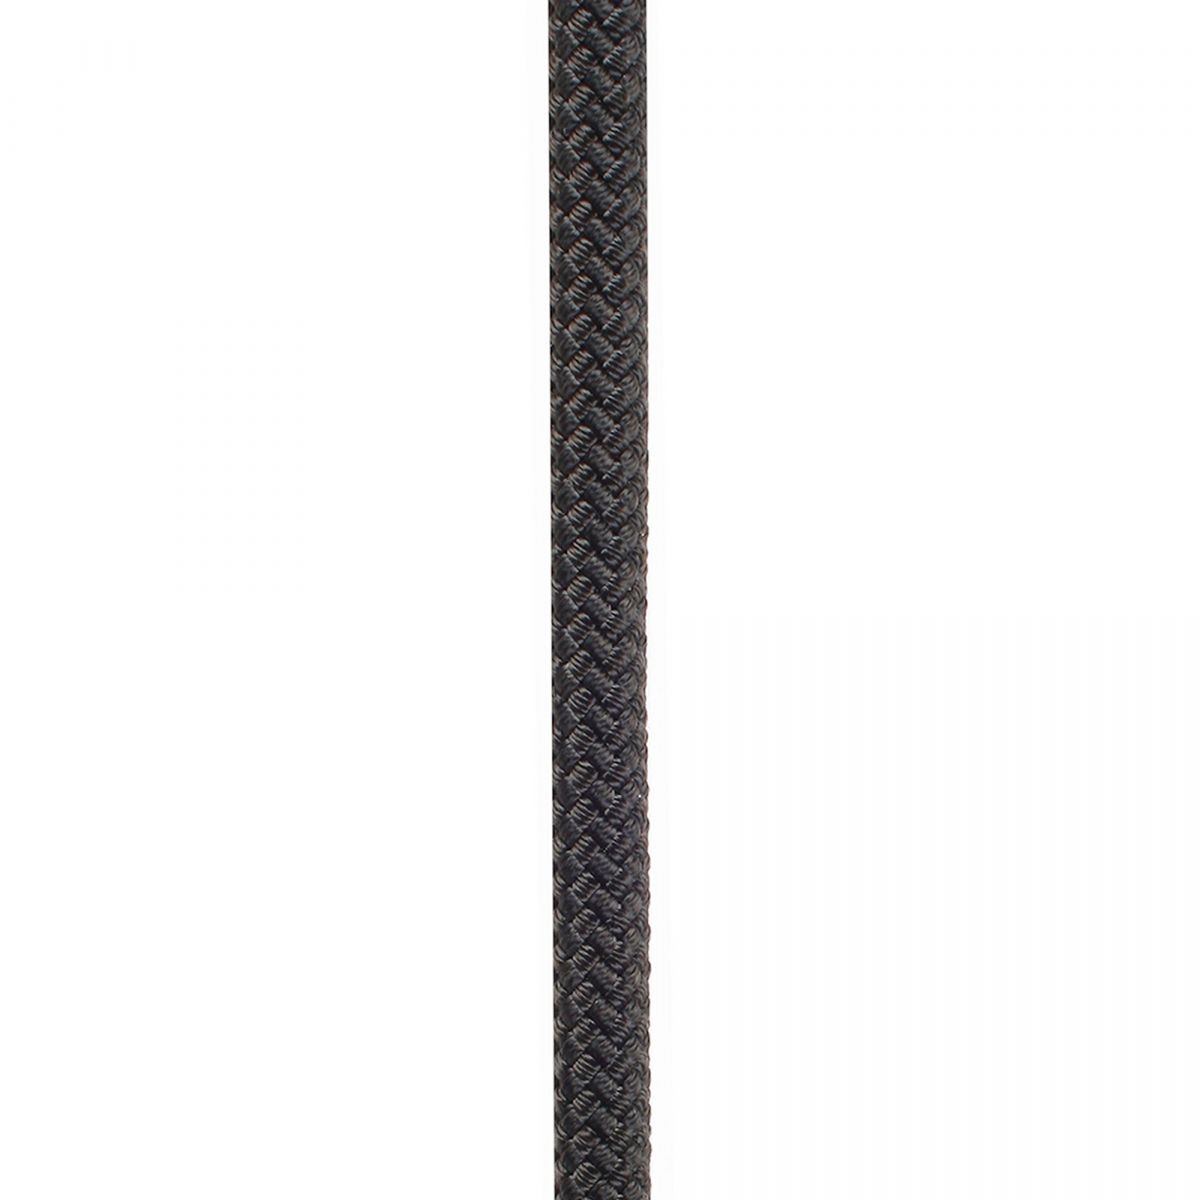 Edelweiss Proline 10,5mm Negra Fracción 5 metros